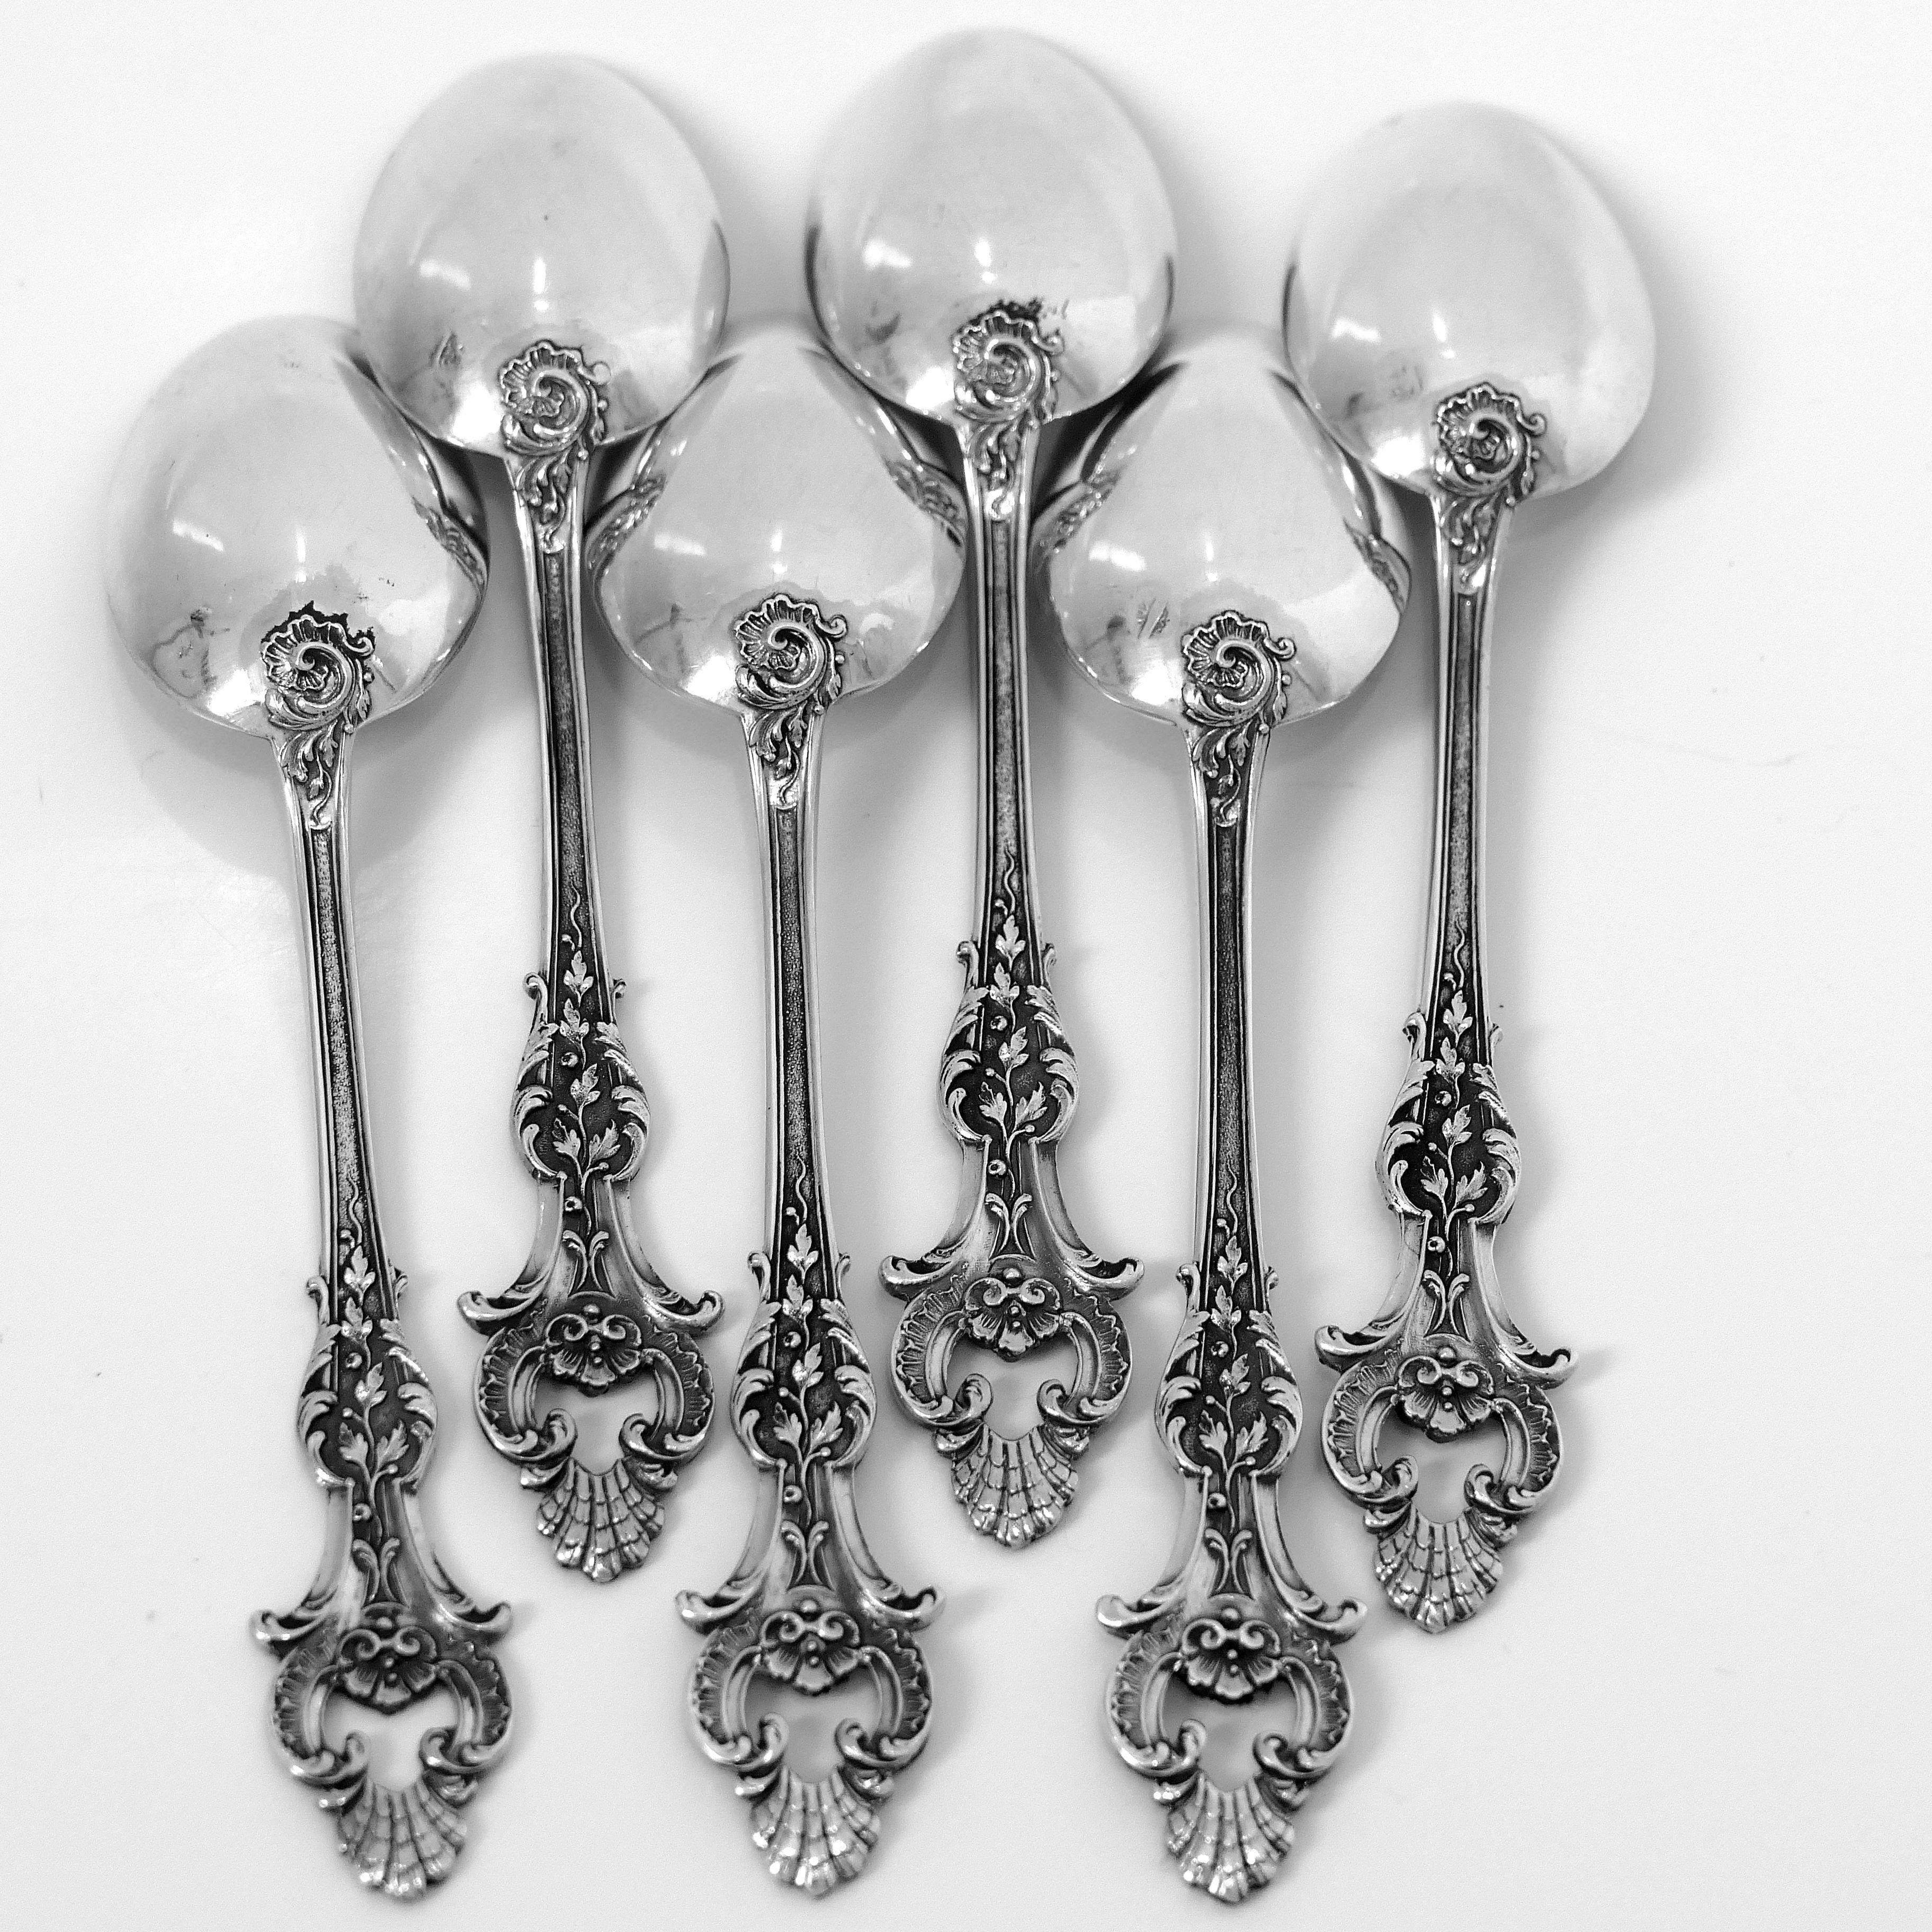 Antique French Sterling Silver Moka Espresso Spoons Set, 6 Piece 2